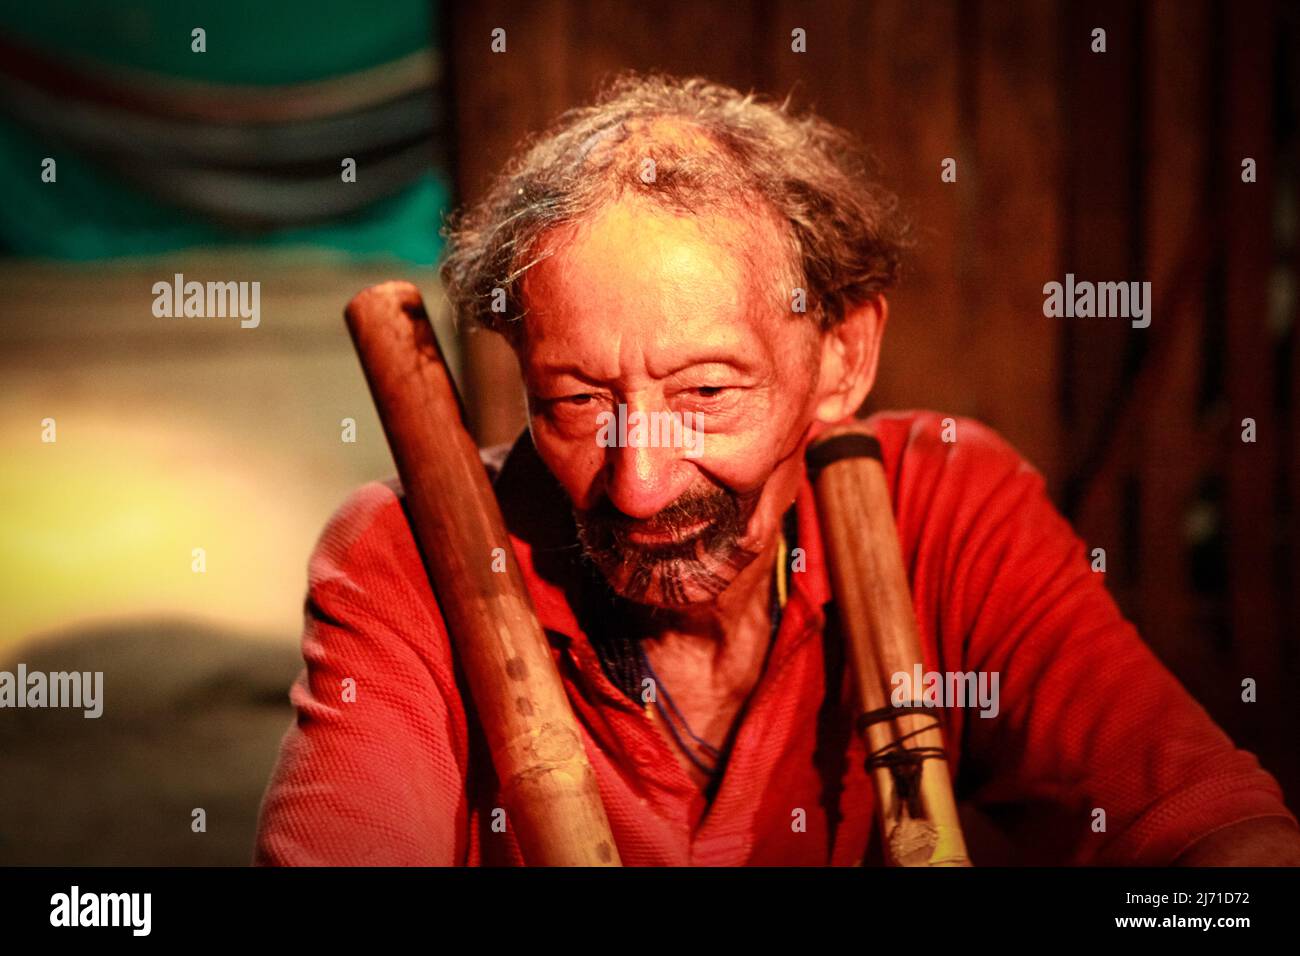 Elderly indigenous man from a Brazilian Amazon tribe of Baixo Amazonas, Pará State, Amazon, Brazil. 2010. Stock Photo